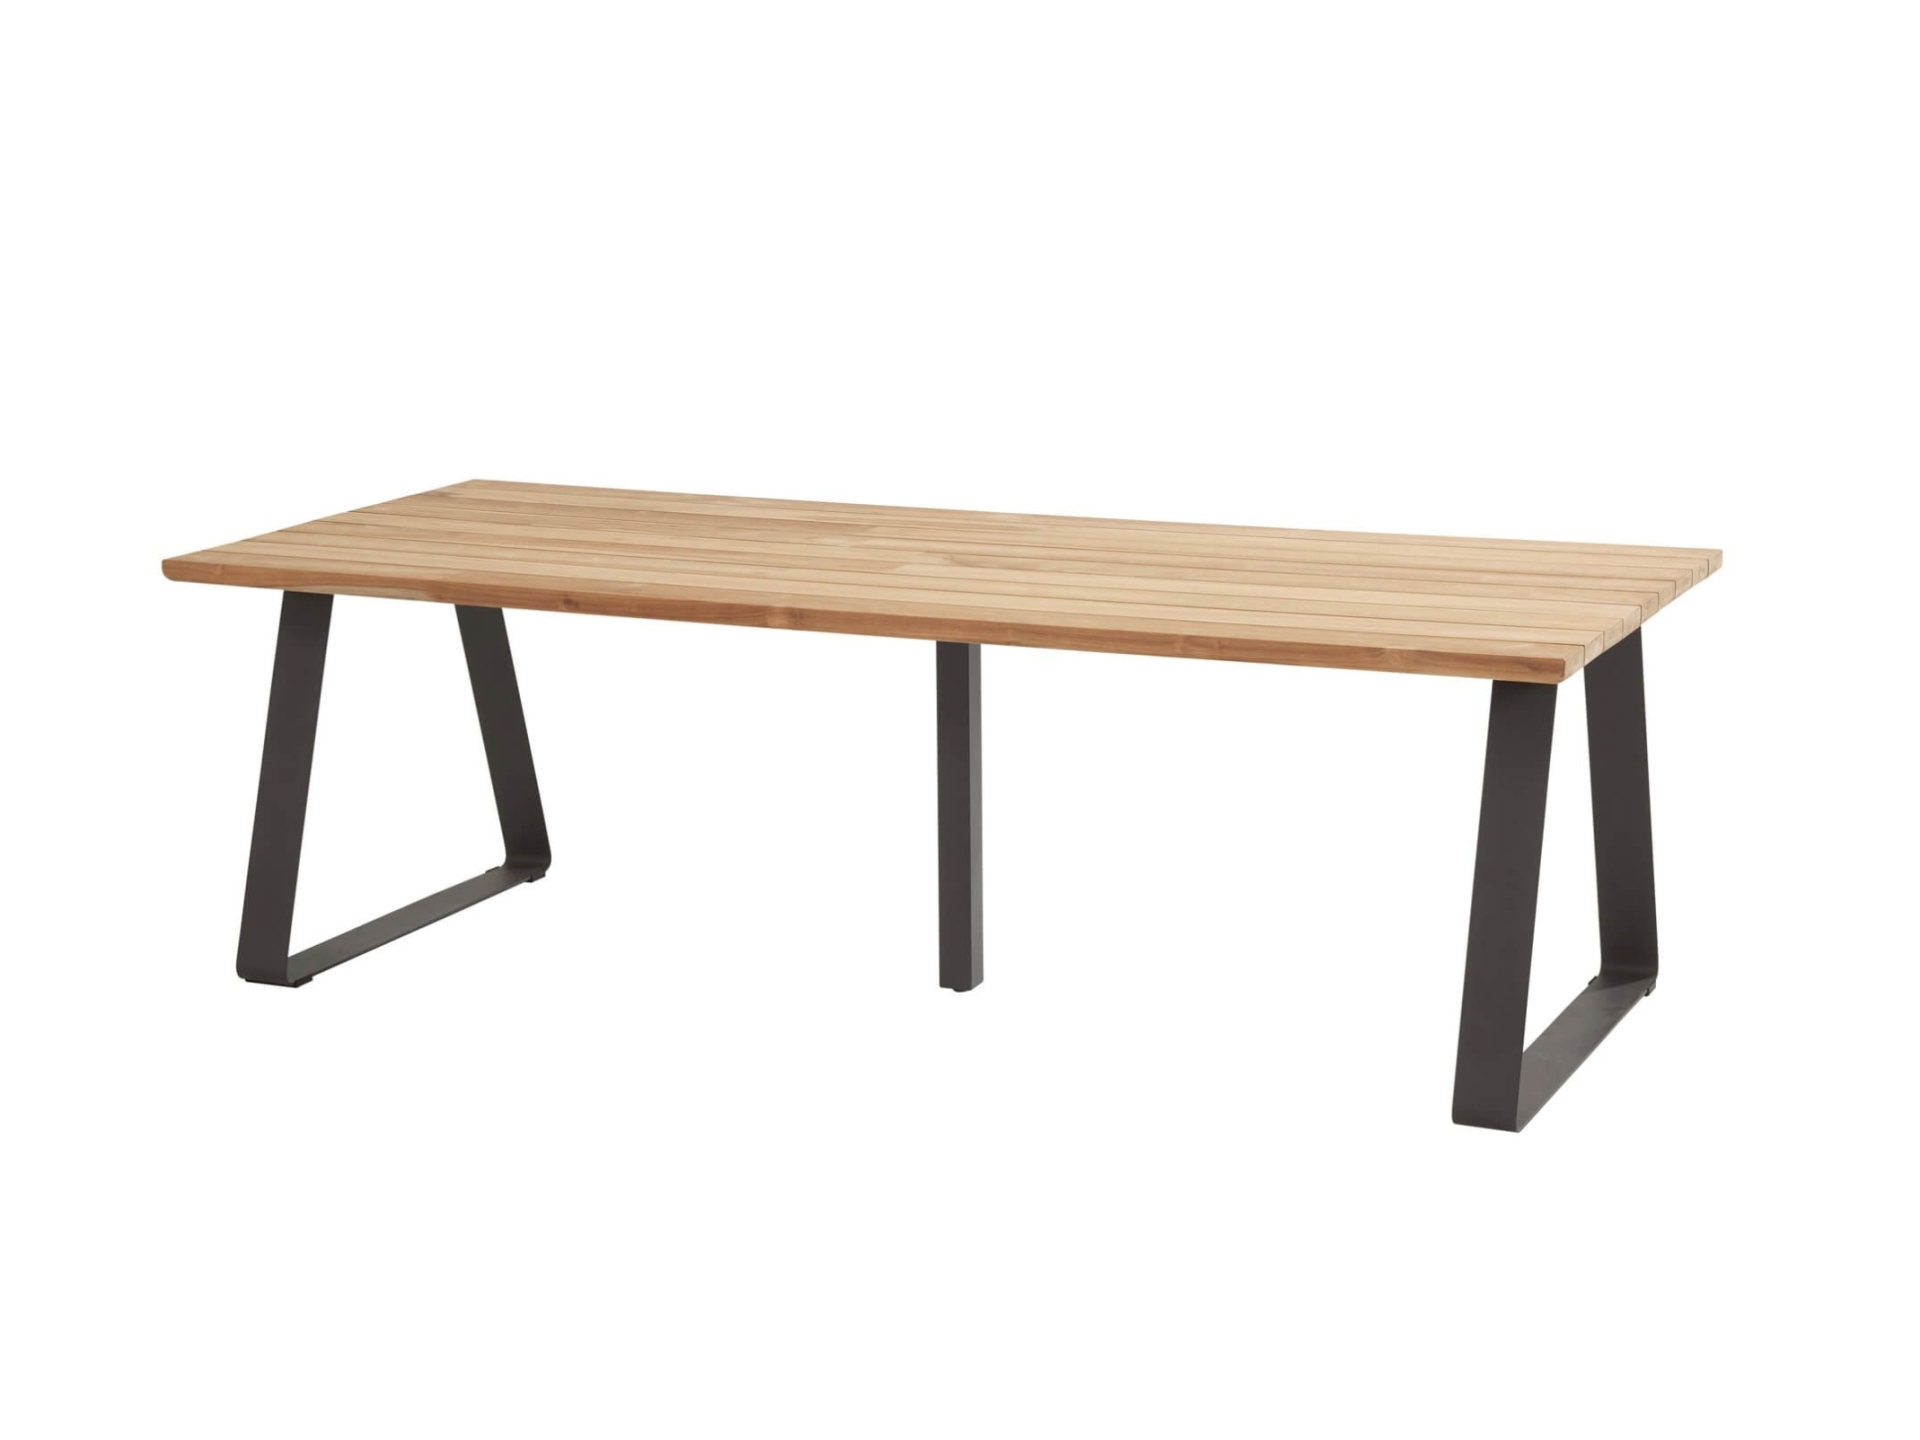 Basso jedálenský stôl 240 cm